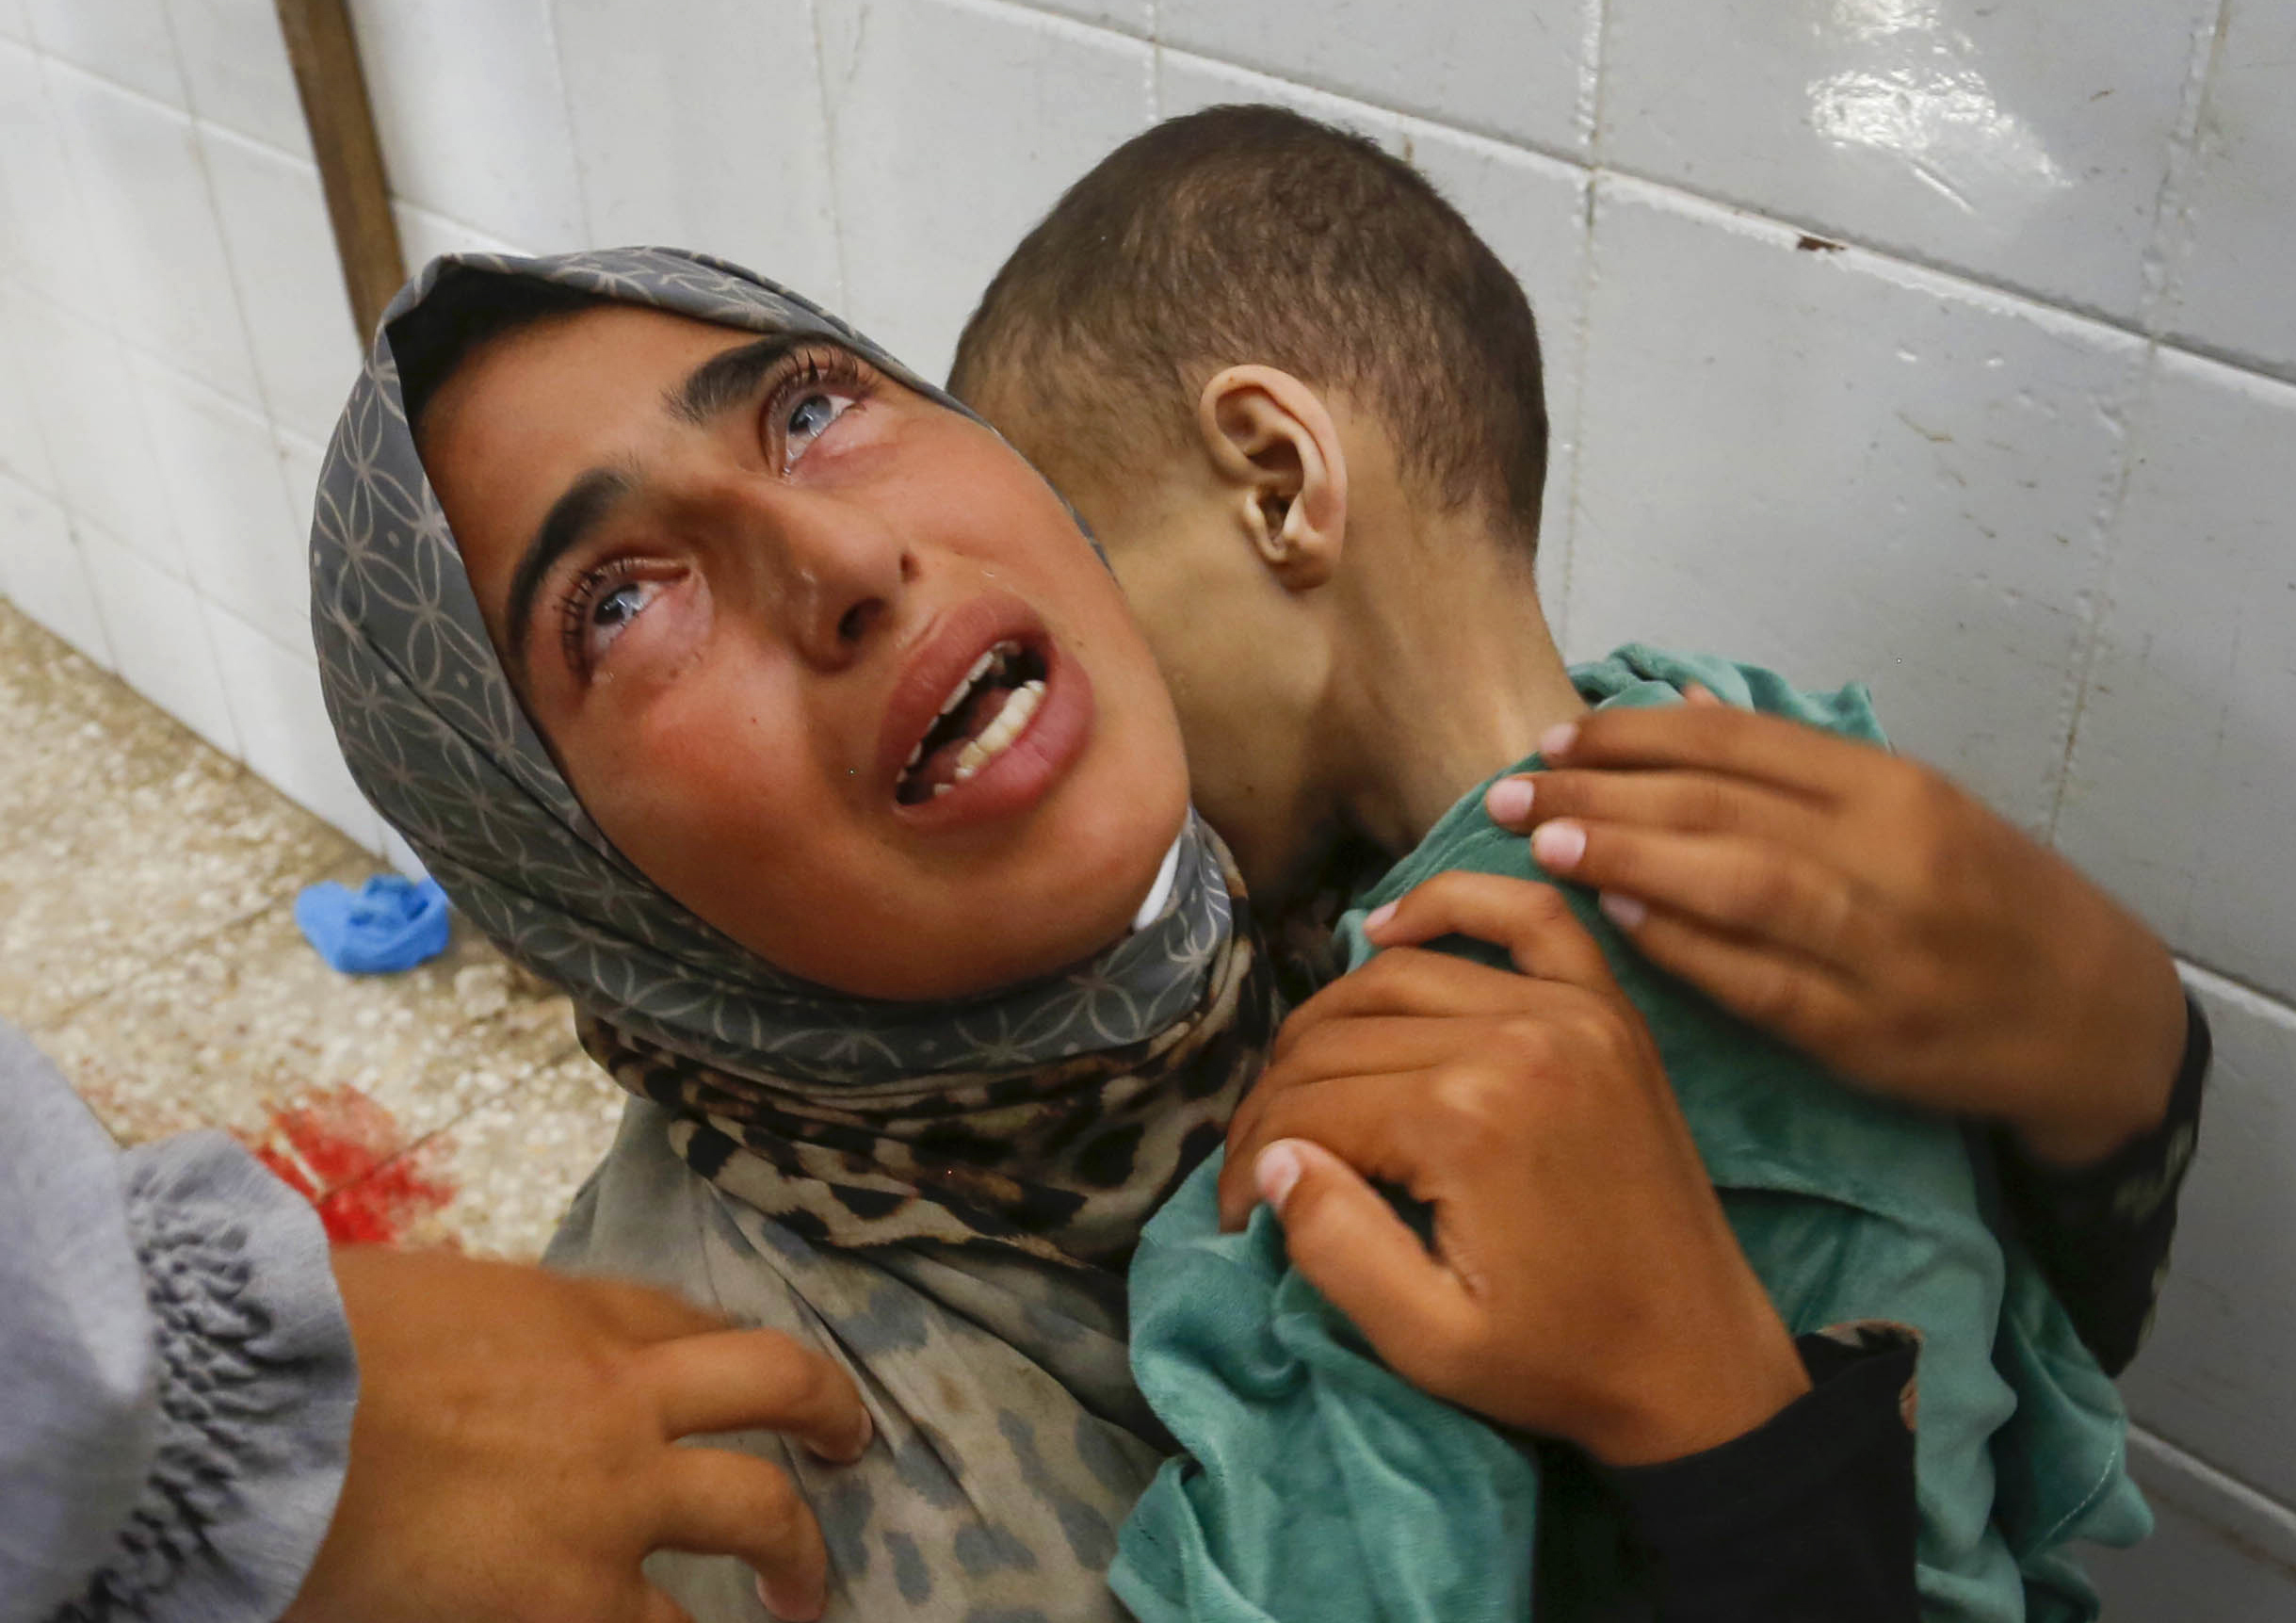 Humanitarian crisis deepens as children die of starvation in Gaza